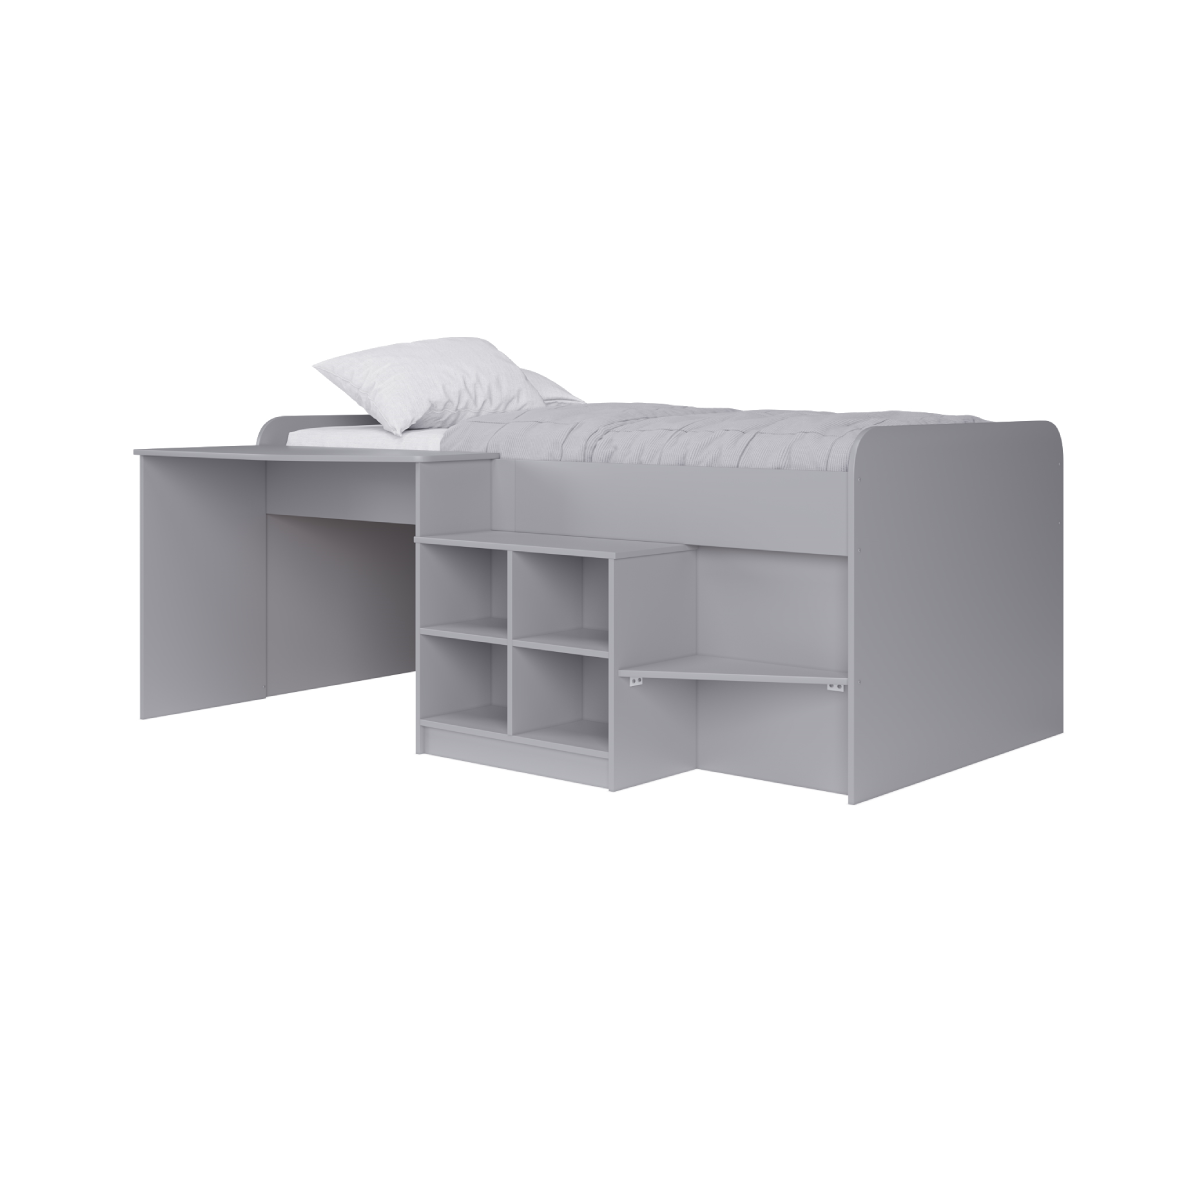 Kidsaw Pilot Cabin Single Storage Bed